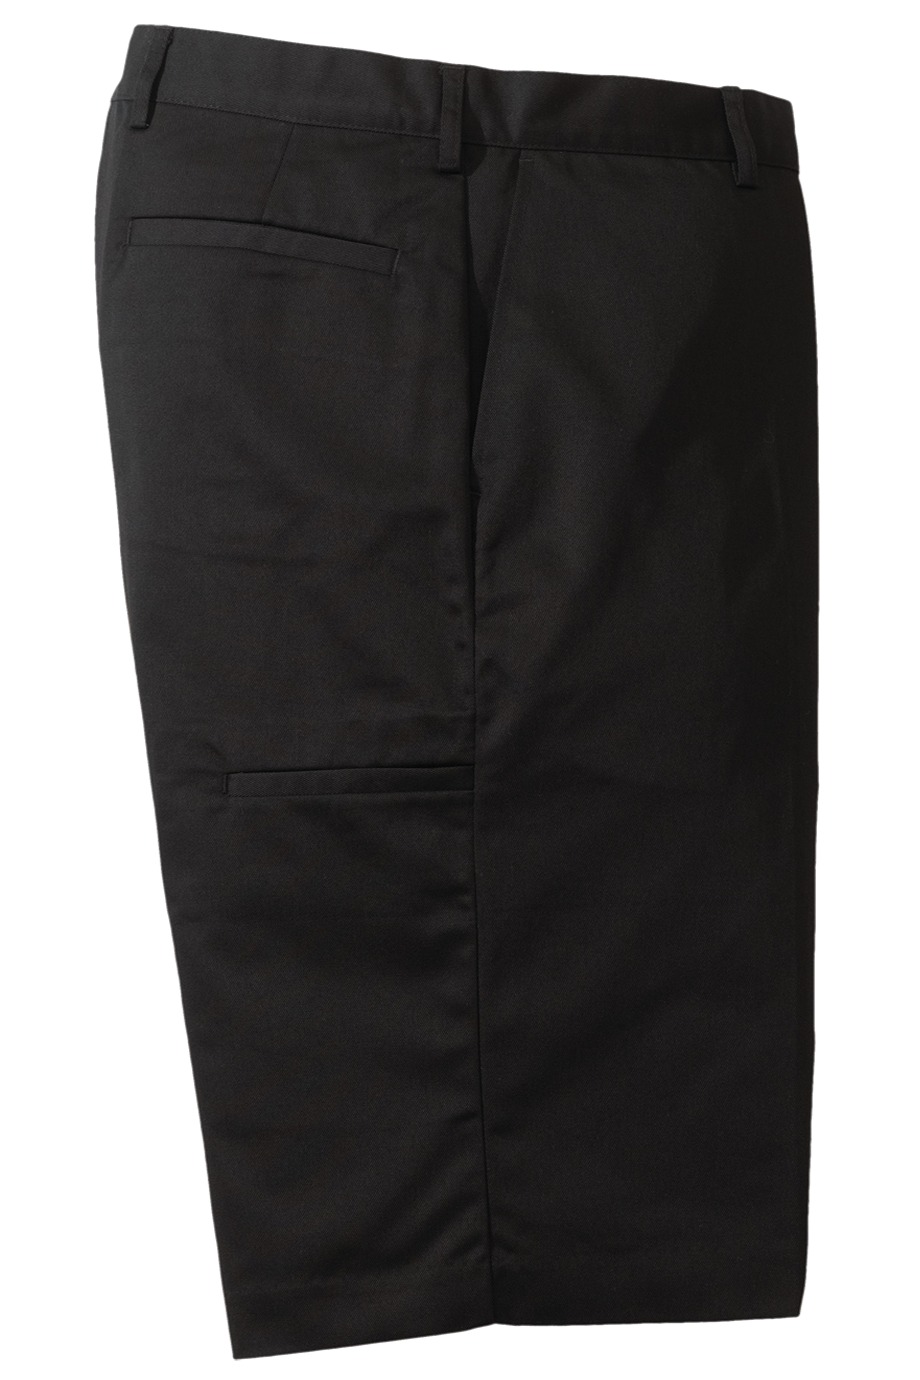 Edwards Garment 2464 - Men's Multi-Use Pocket Utility Chino Short